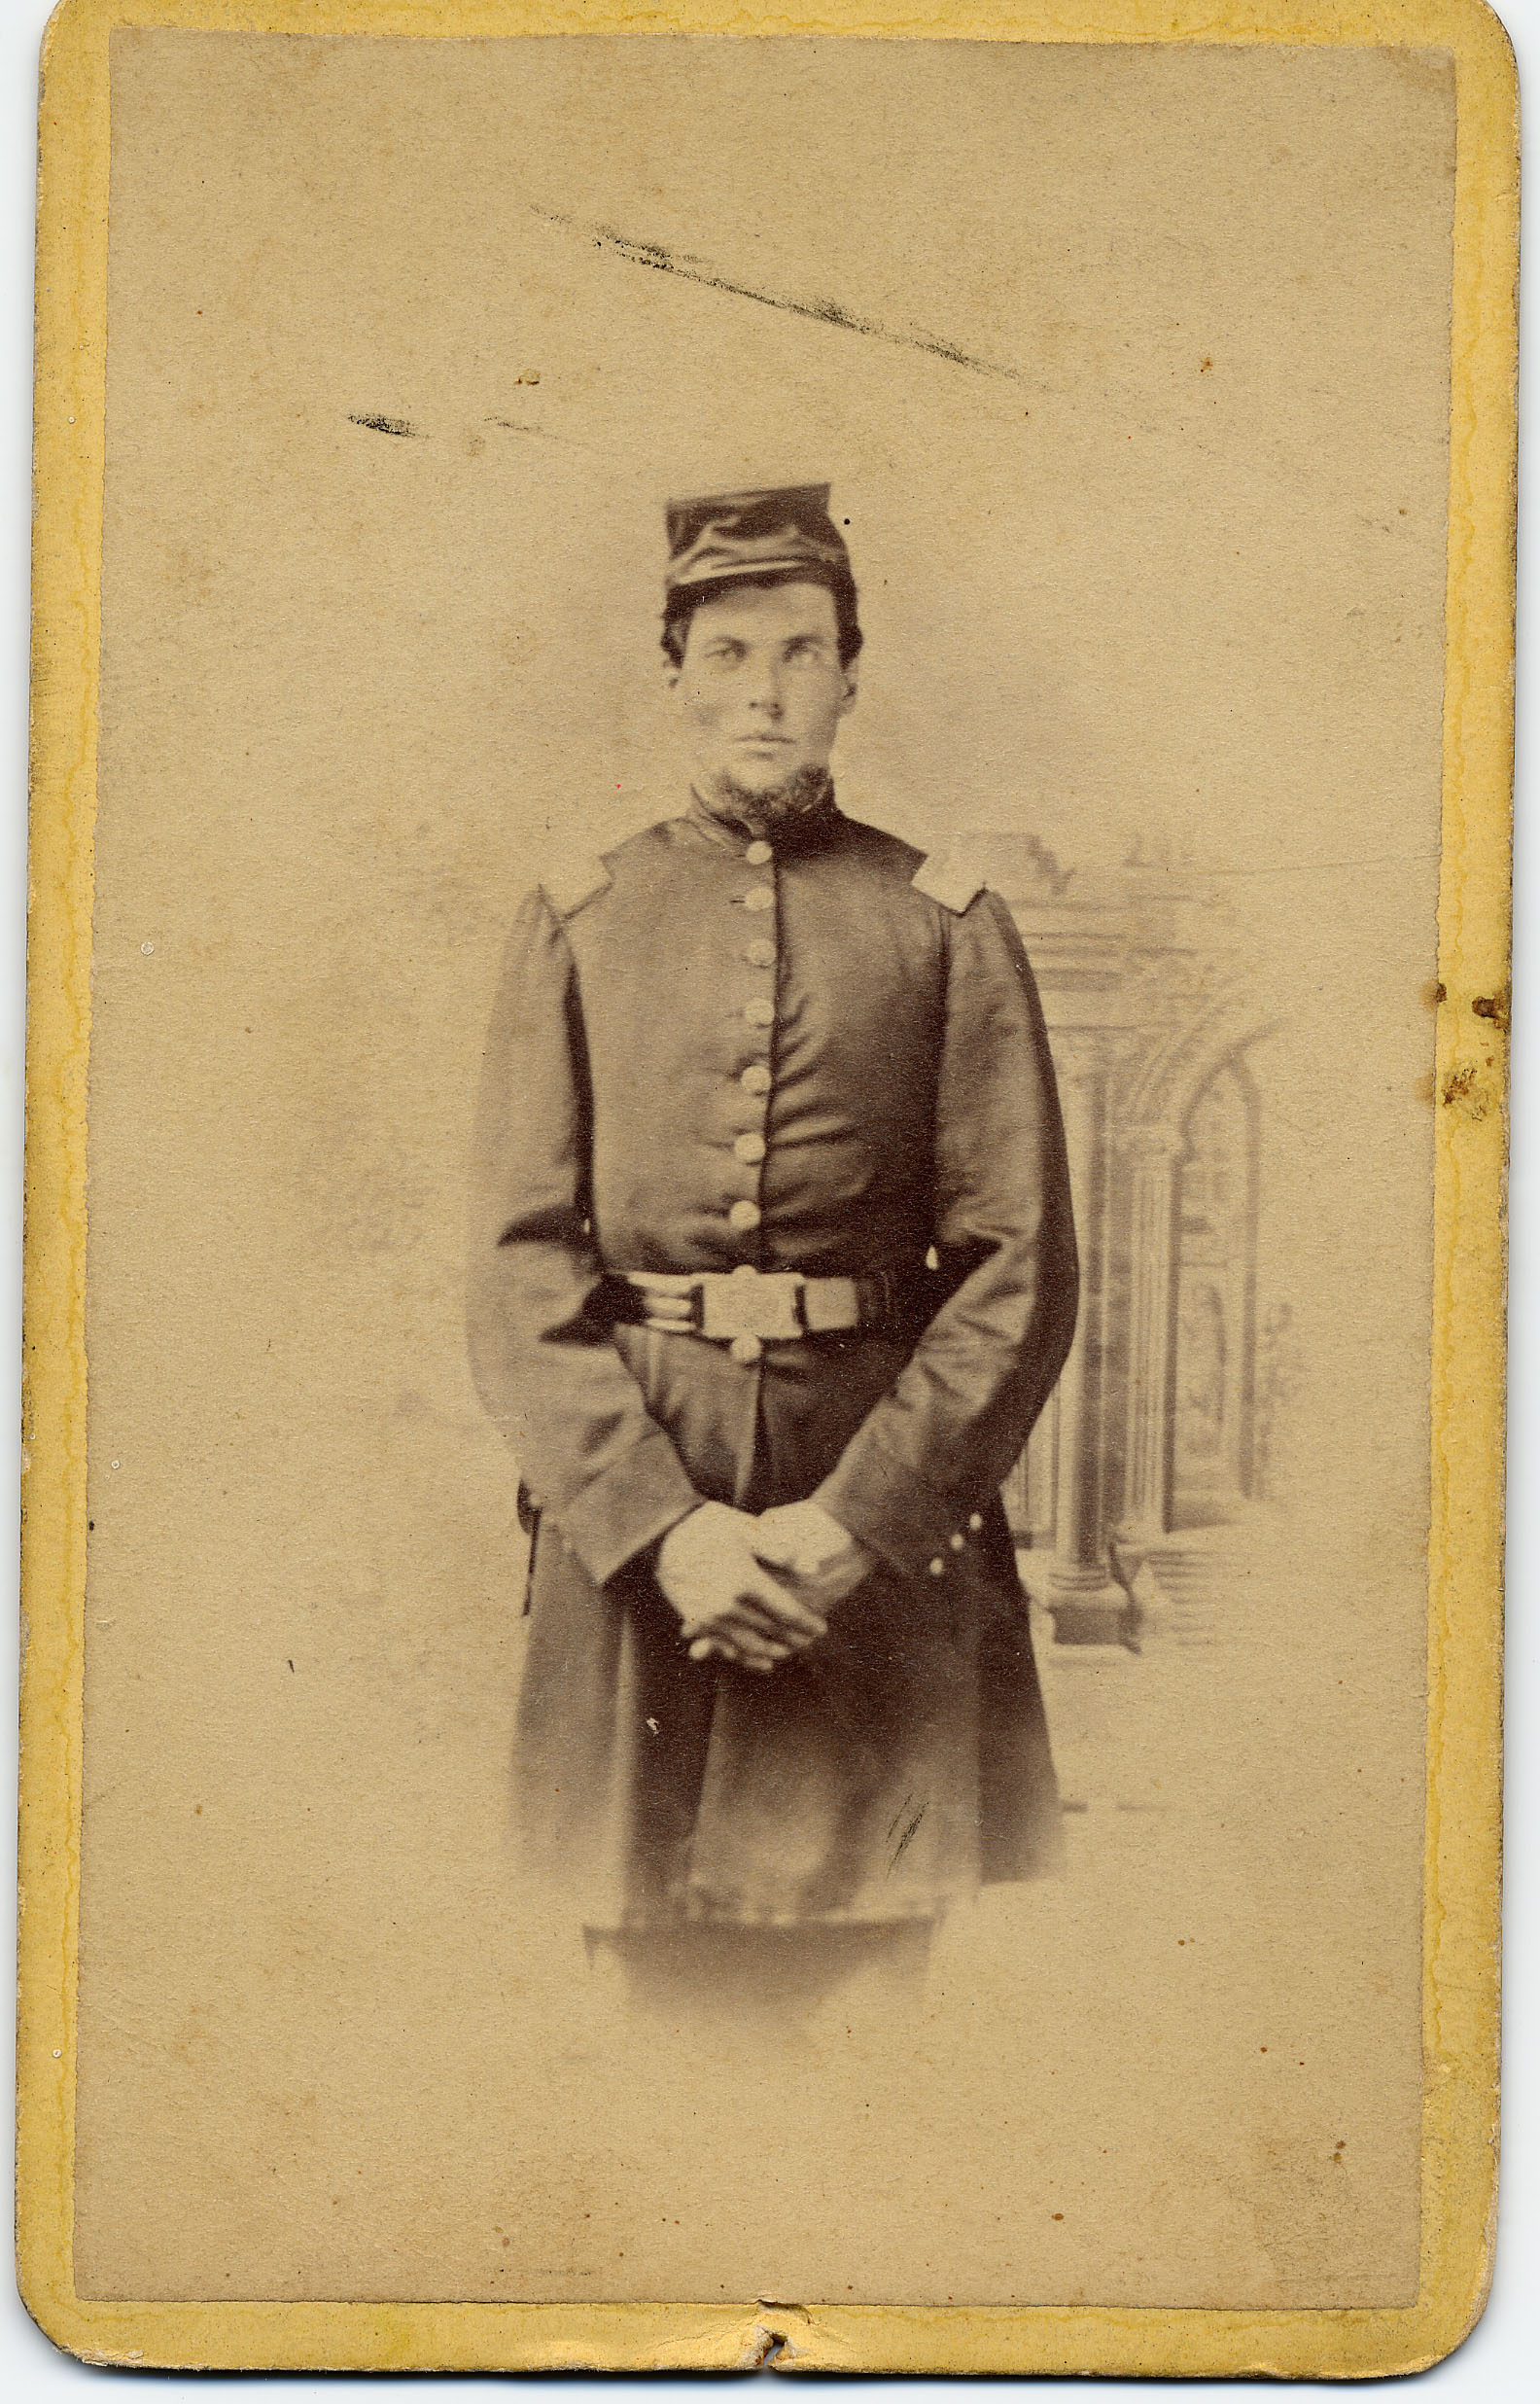 Captain George Stover, 28th NJ Volunteers, Photographer: John L. La Forge, Perth Amboy, NJ